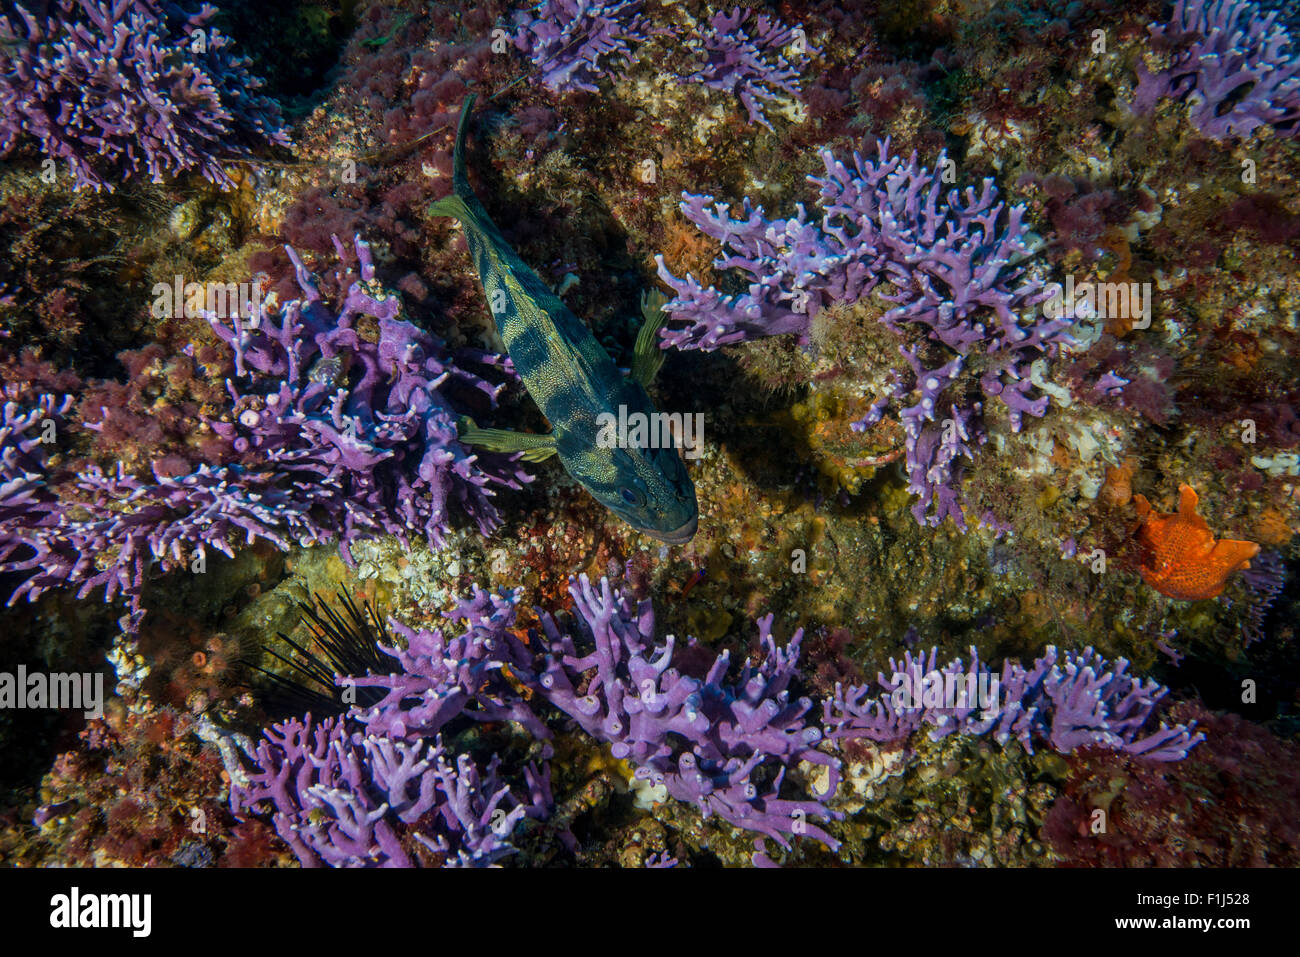 A mature treefish Sebastes serriceps rockfish resting amongst purple hydrocoral Stock Photo